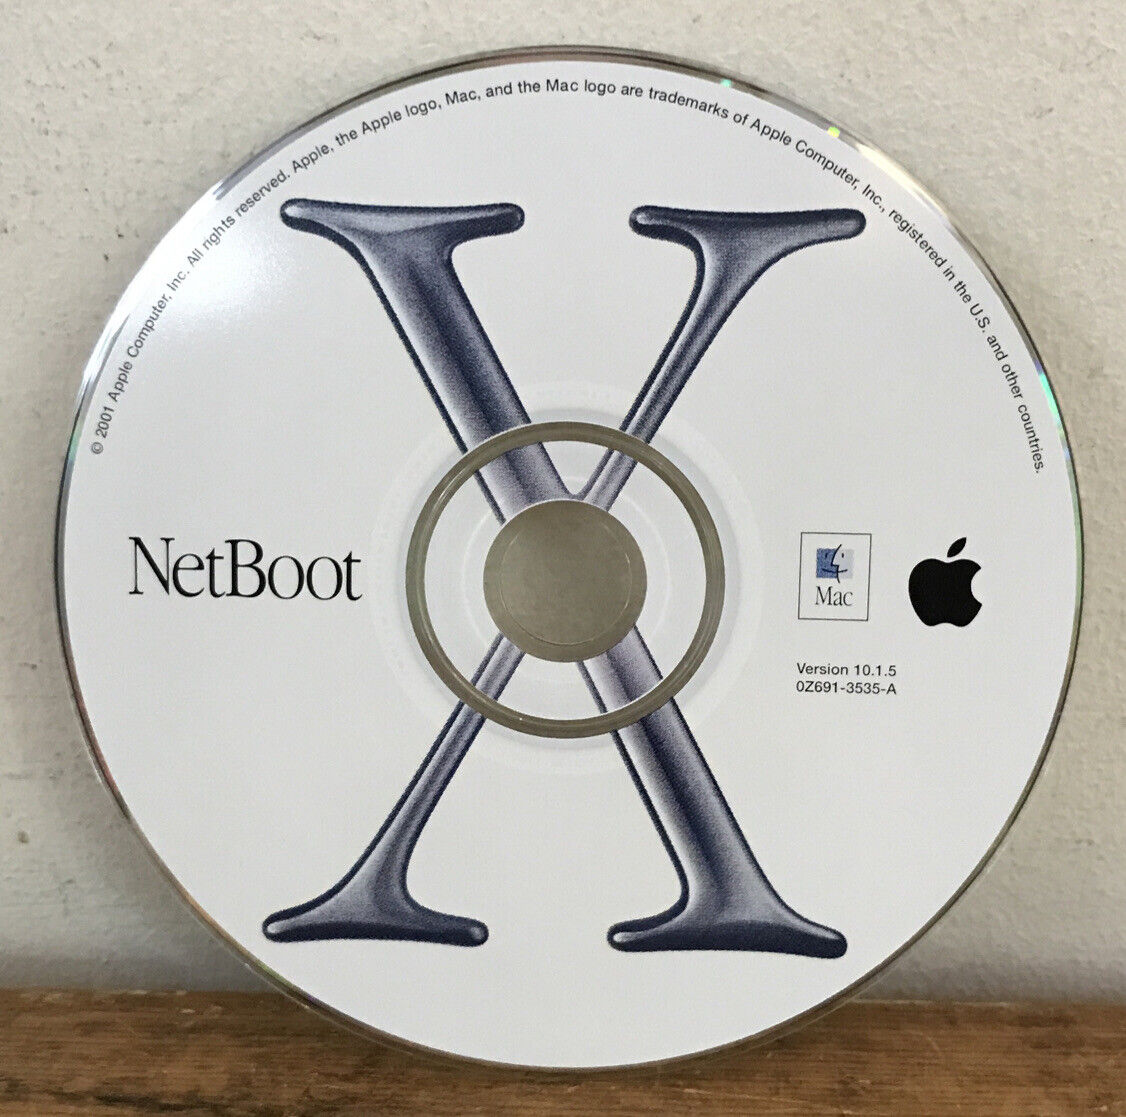 Vintage 2001 Apple Macintosh Mac OS X NetBoot Software Disc Version 10.1.5